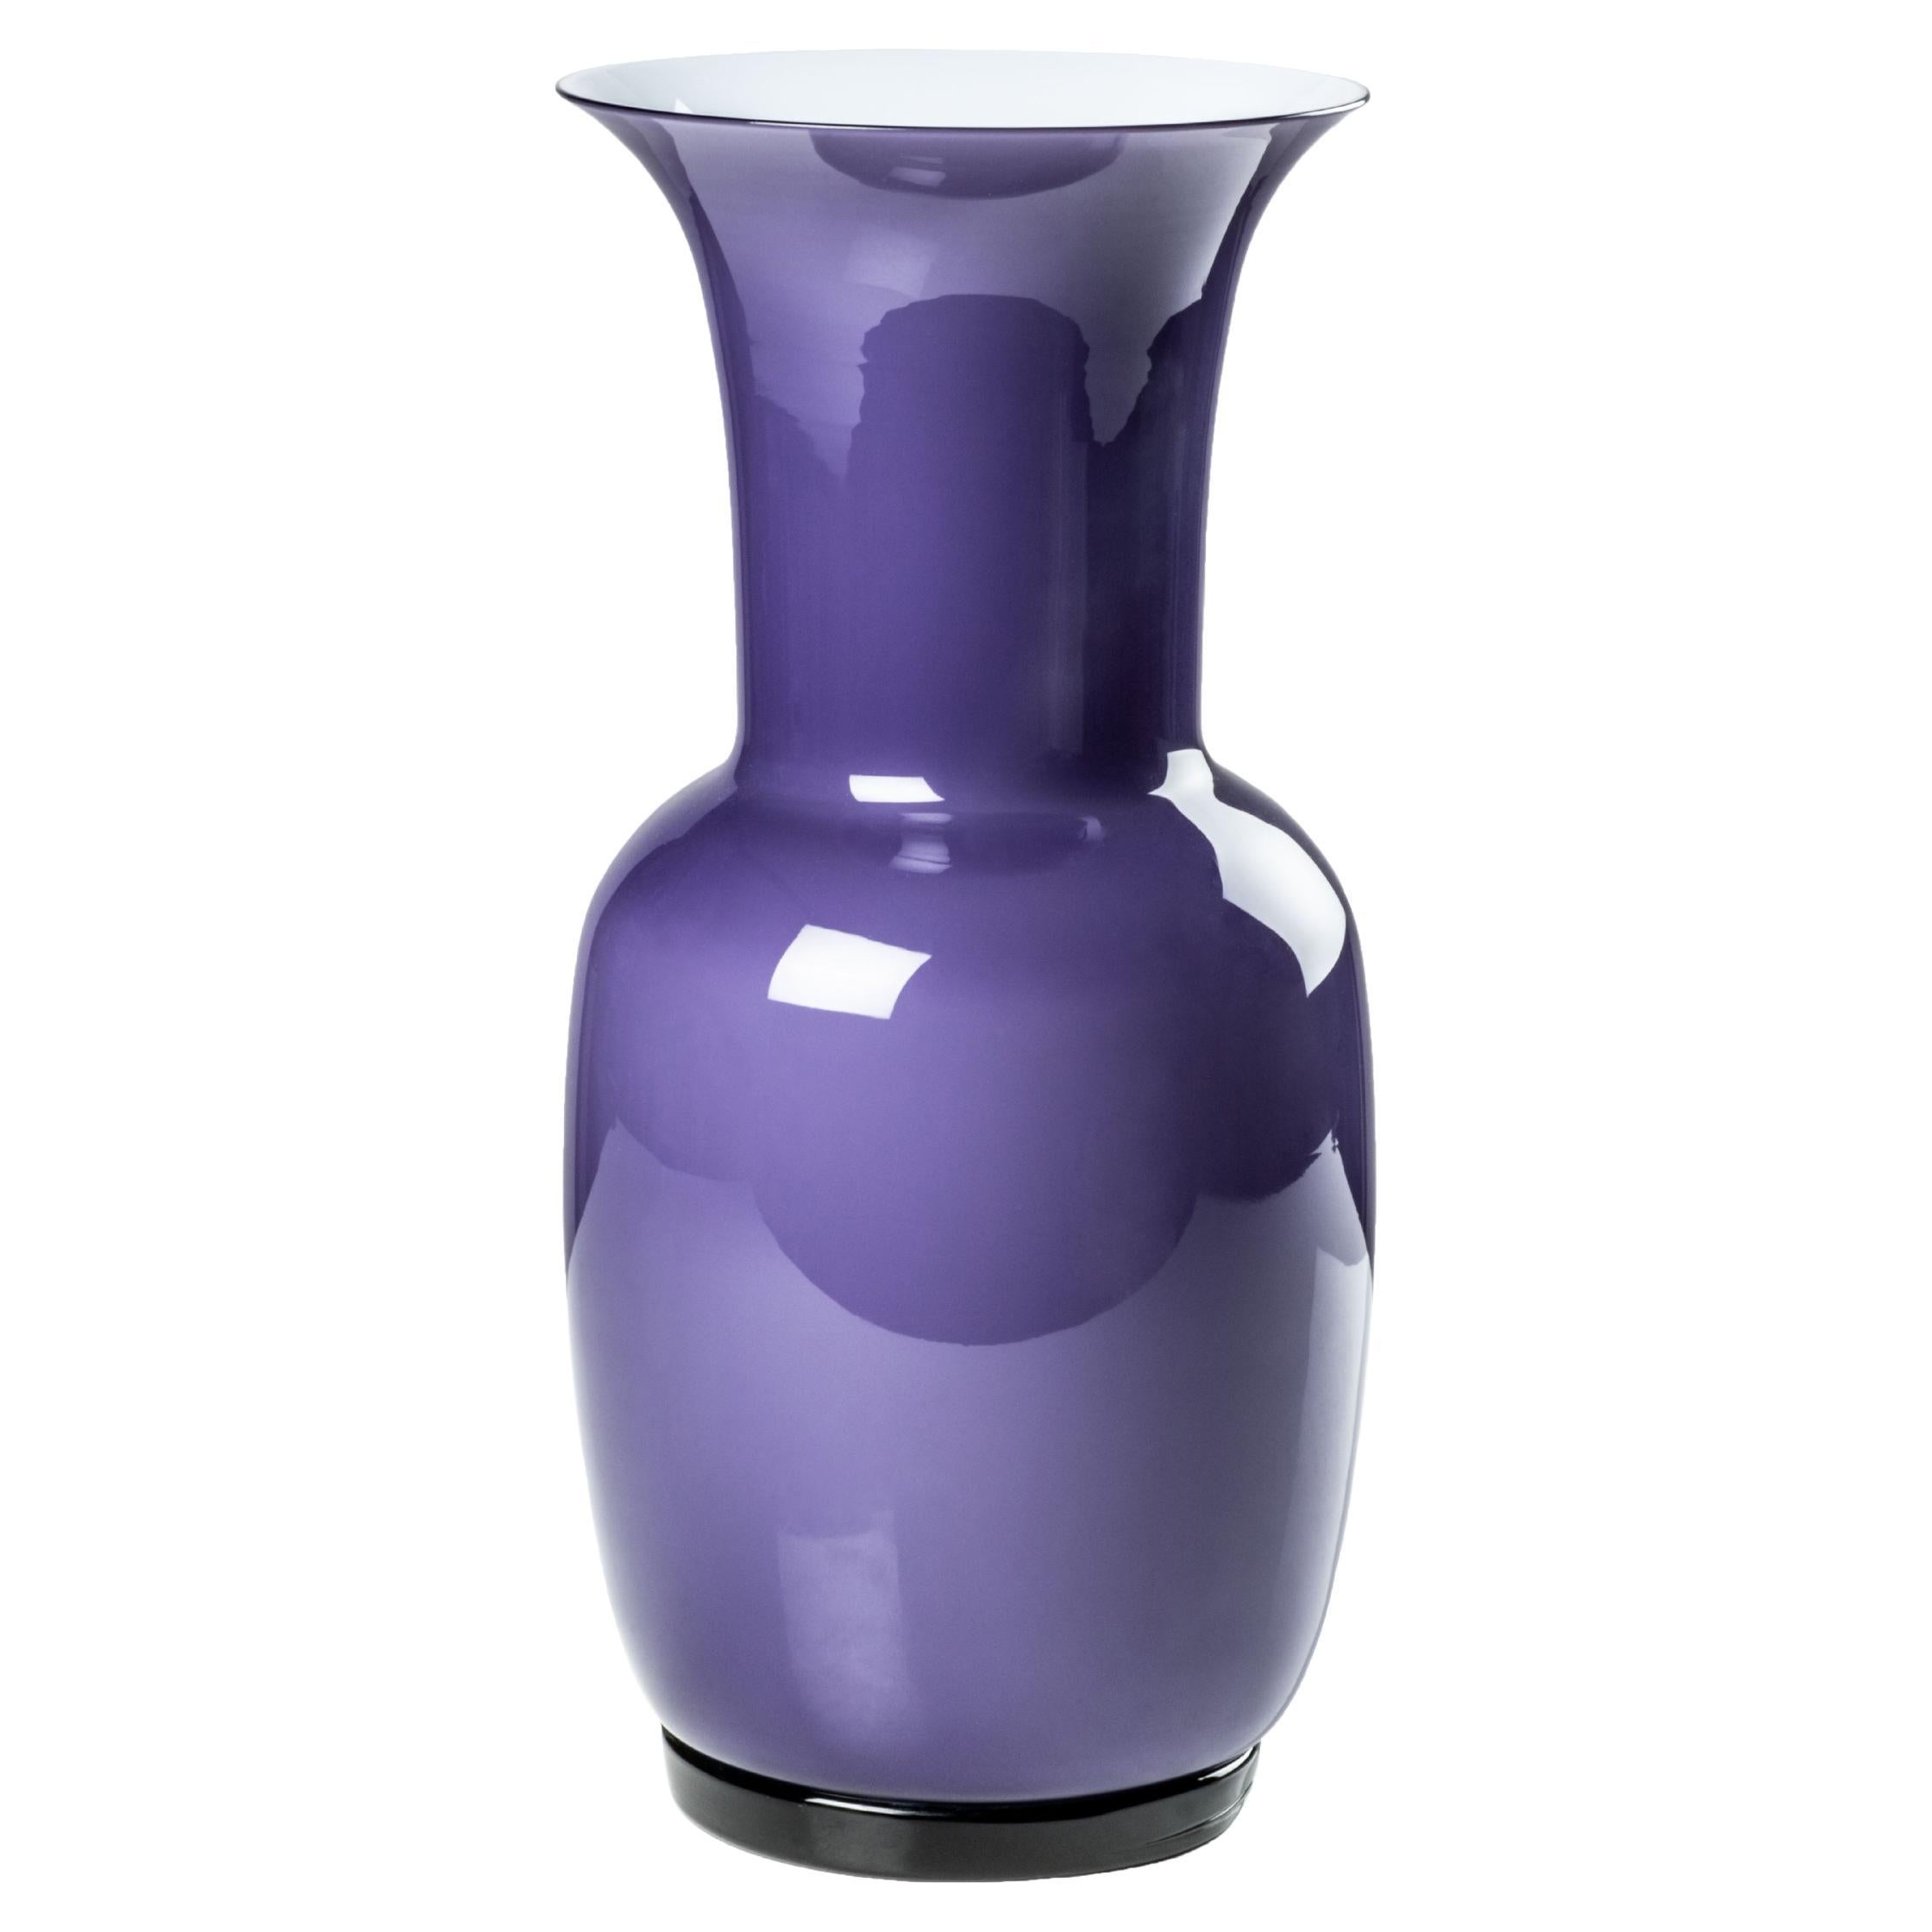 Opalino Glass Vase in Indigo Milk White Inside by Venini